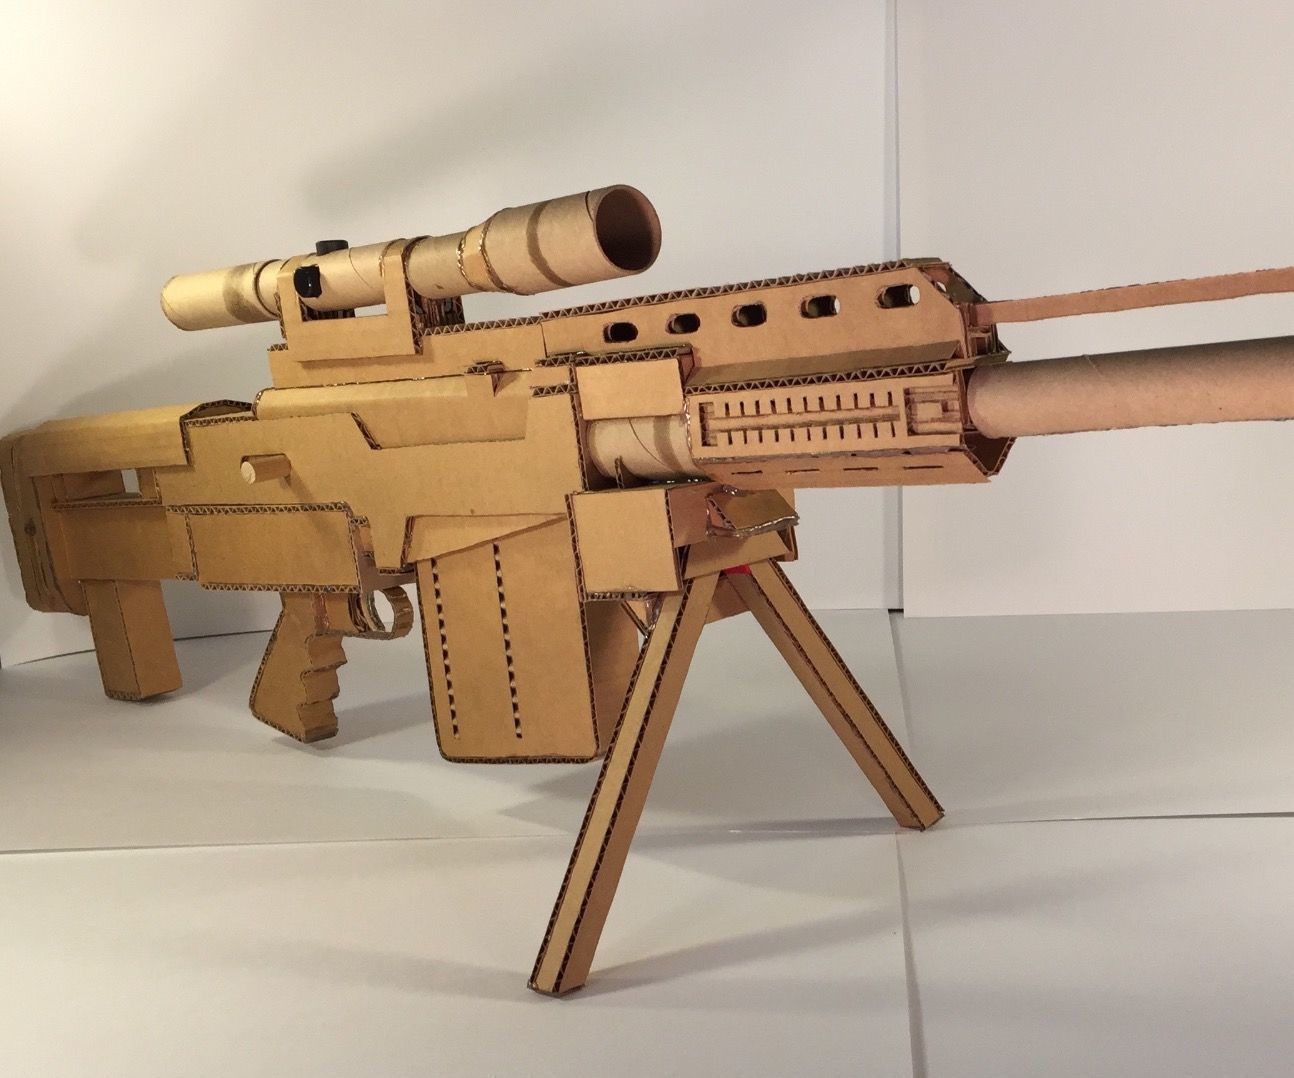 Papercraft Guns Fully Functioning Cardboard as 50 Sniper Rifle